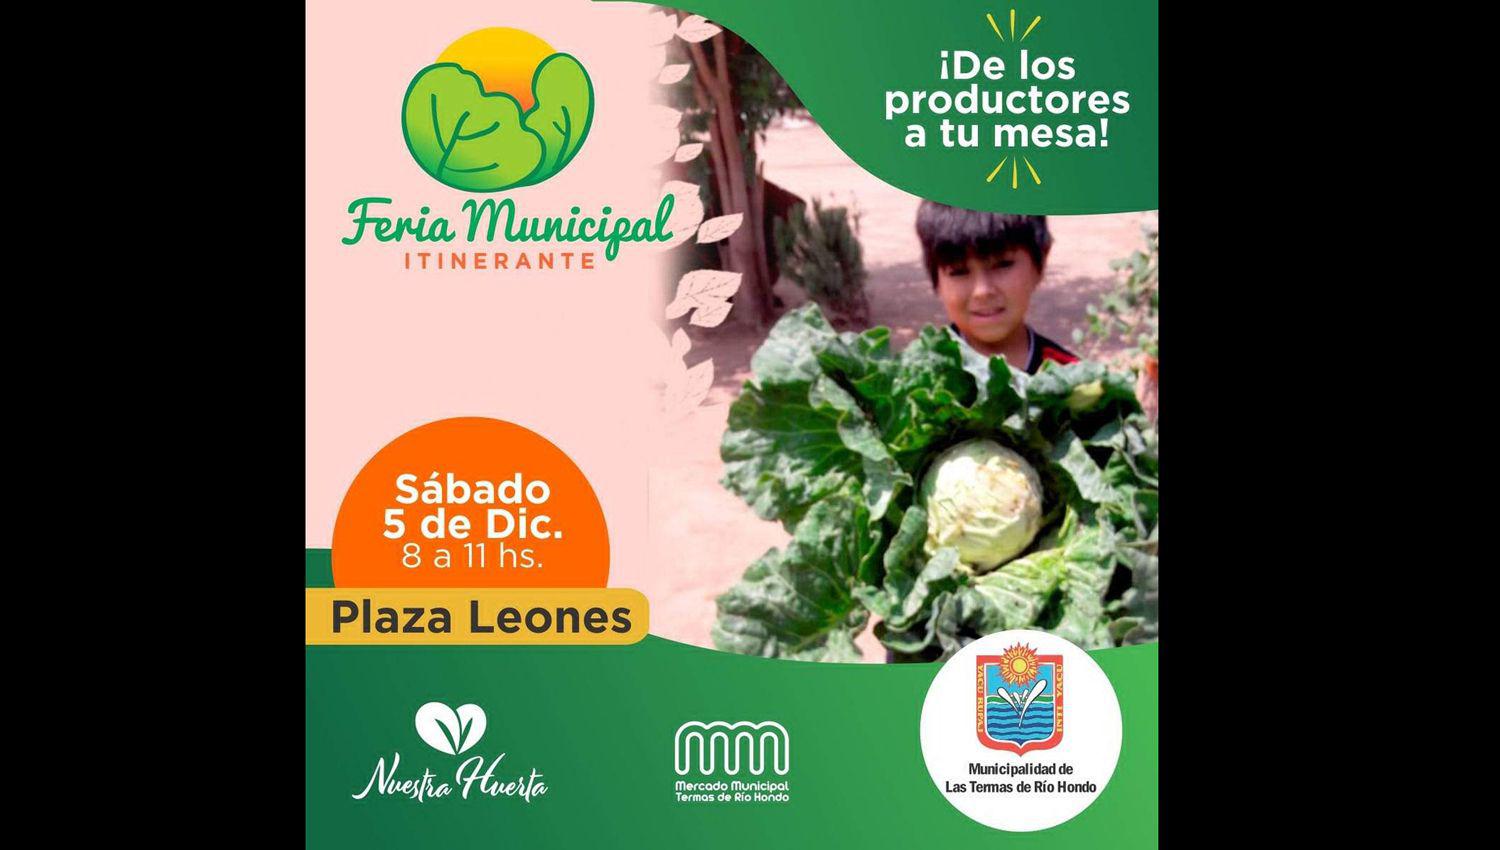 La Feria Municipal Itinerante termense se presentaraacute en la plaza Los Leones